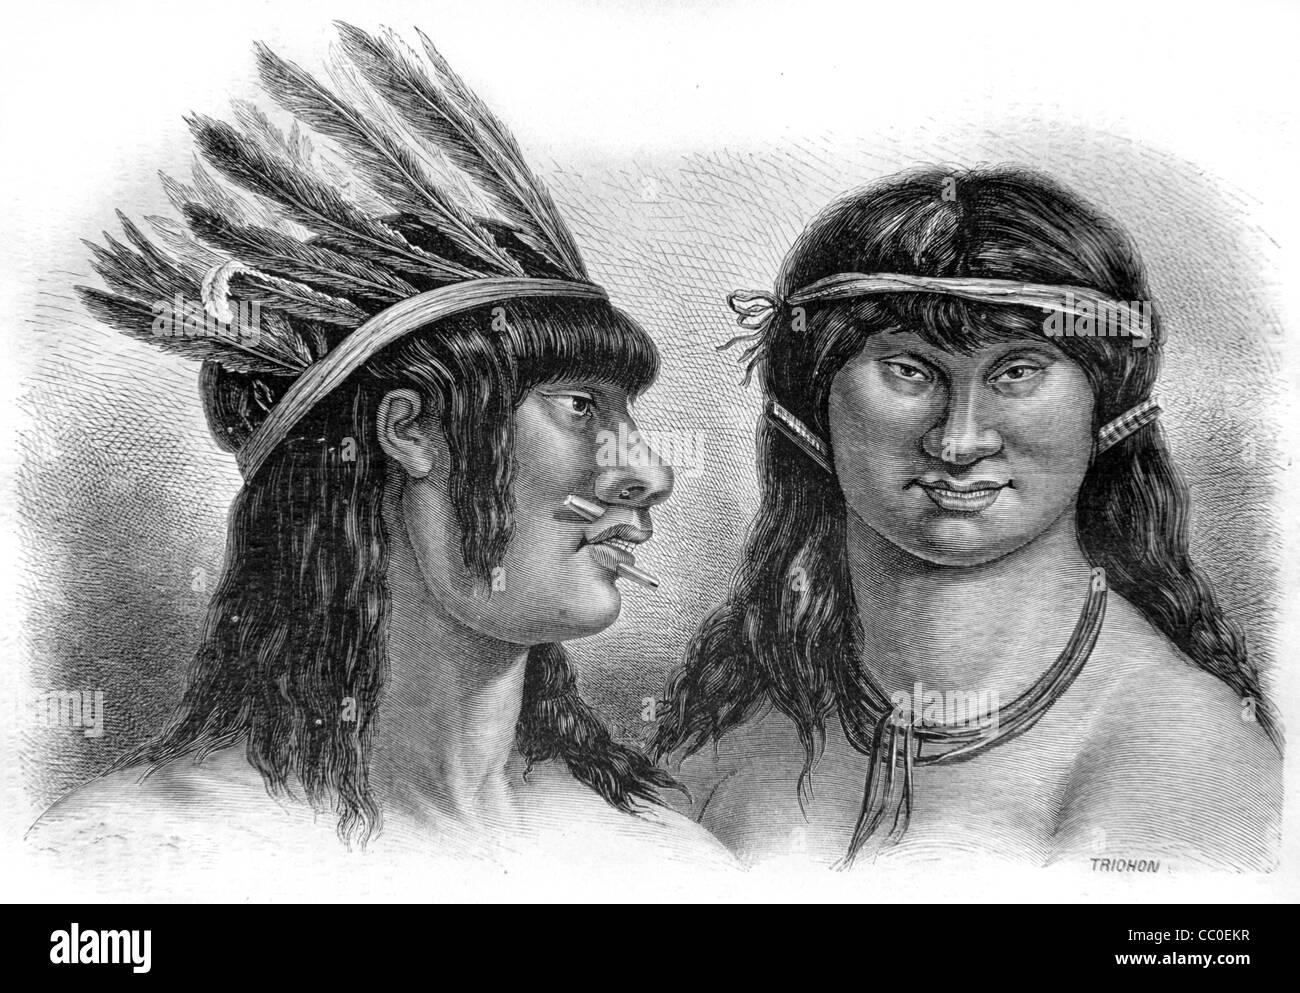 Indianer Piercing